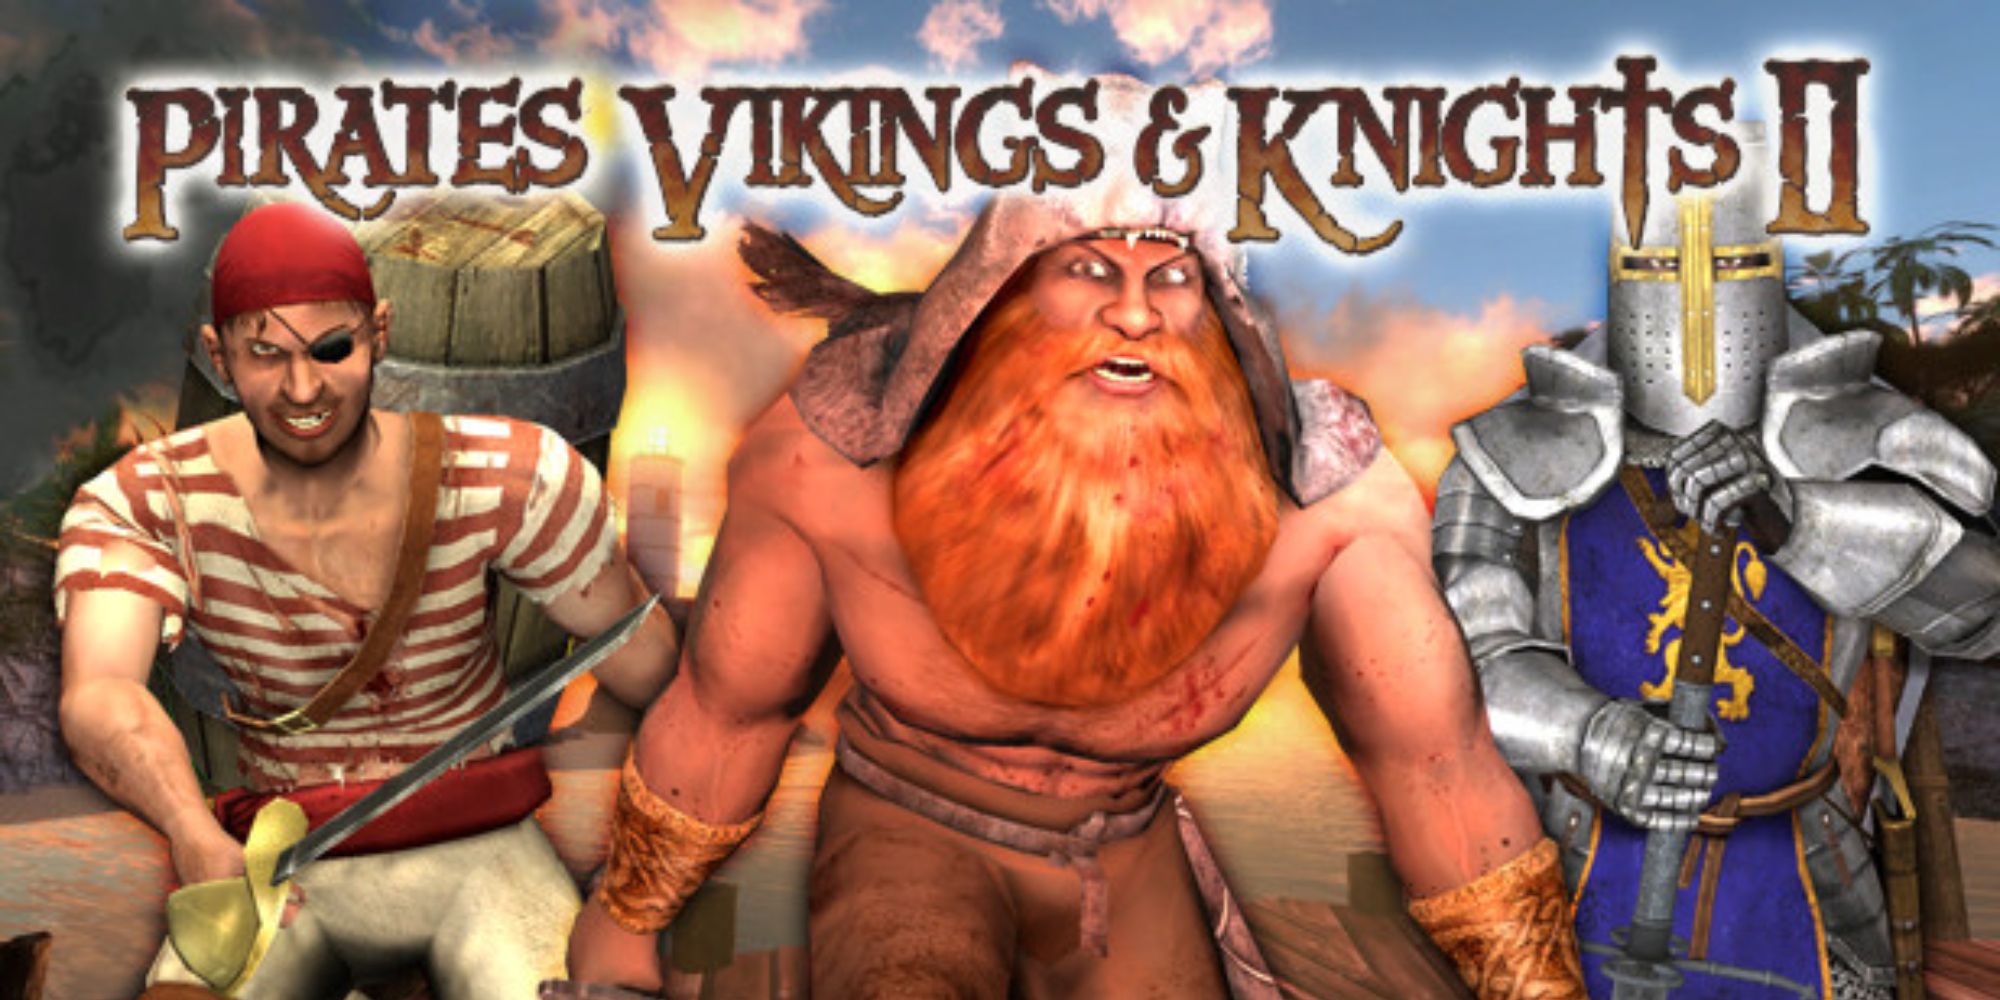 Pirates Vikings Knights